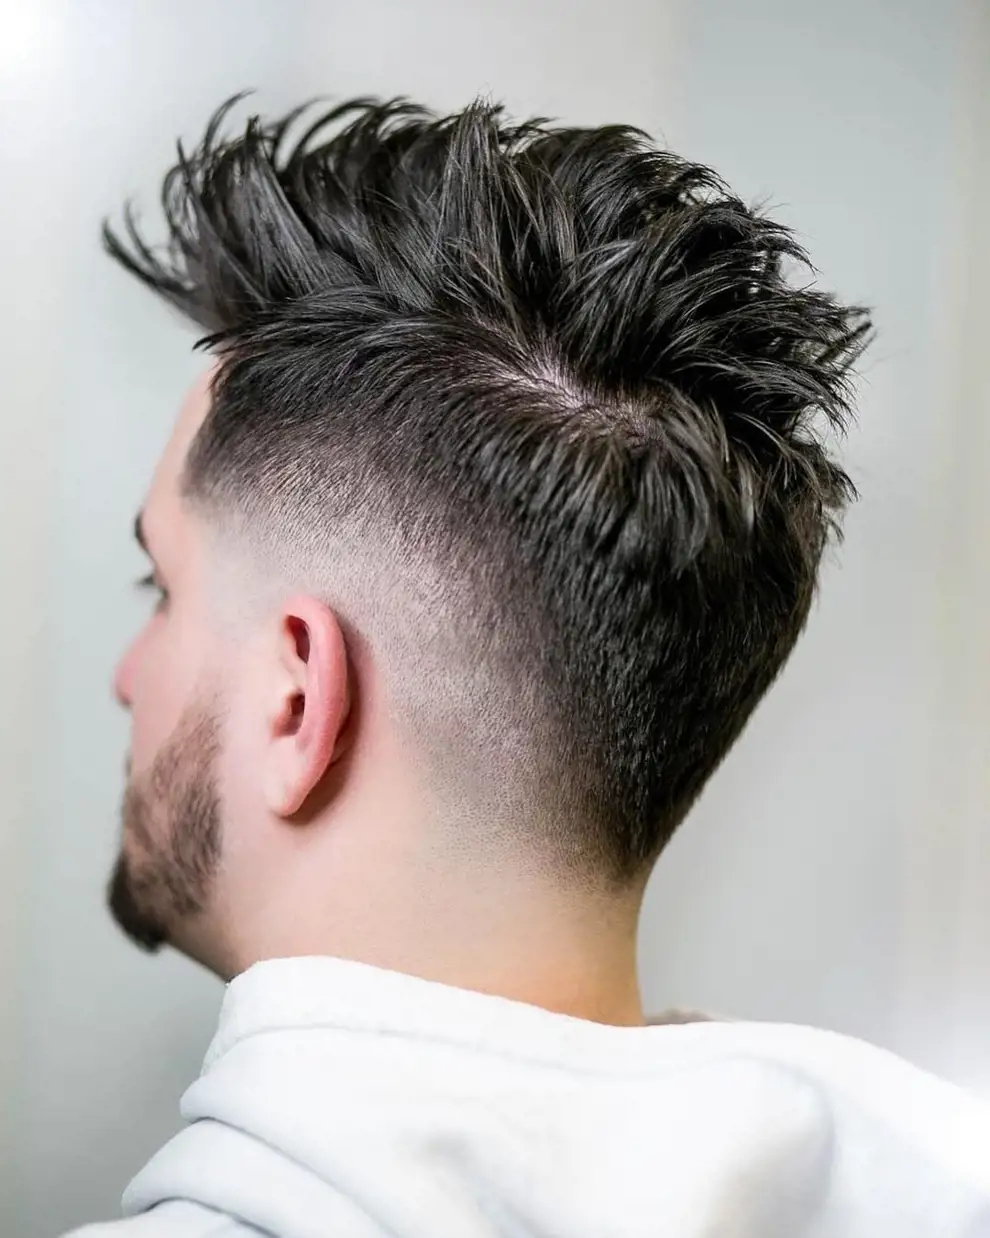  7 cortes de pelo en pico para hombre: tendencias capilares que arrasan entre ellos